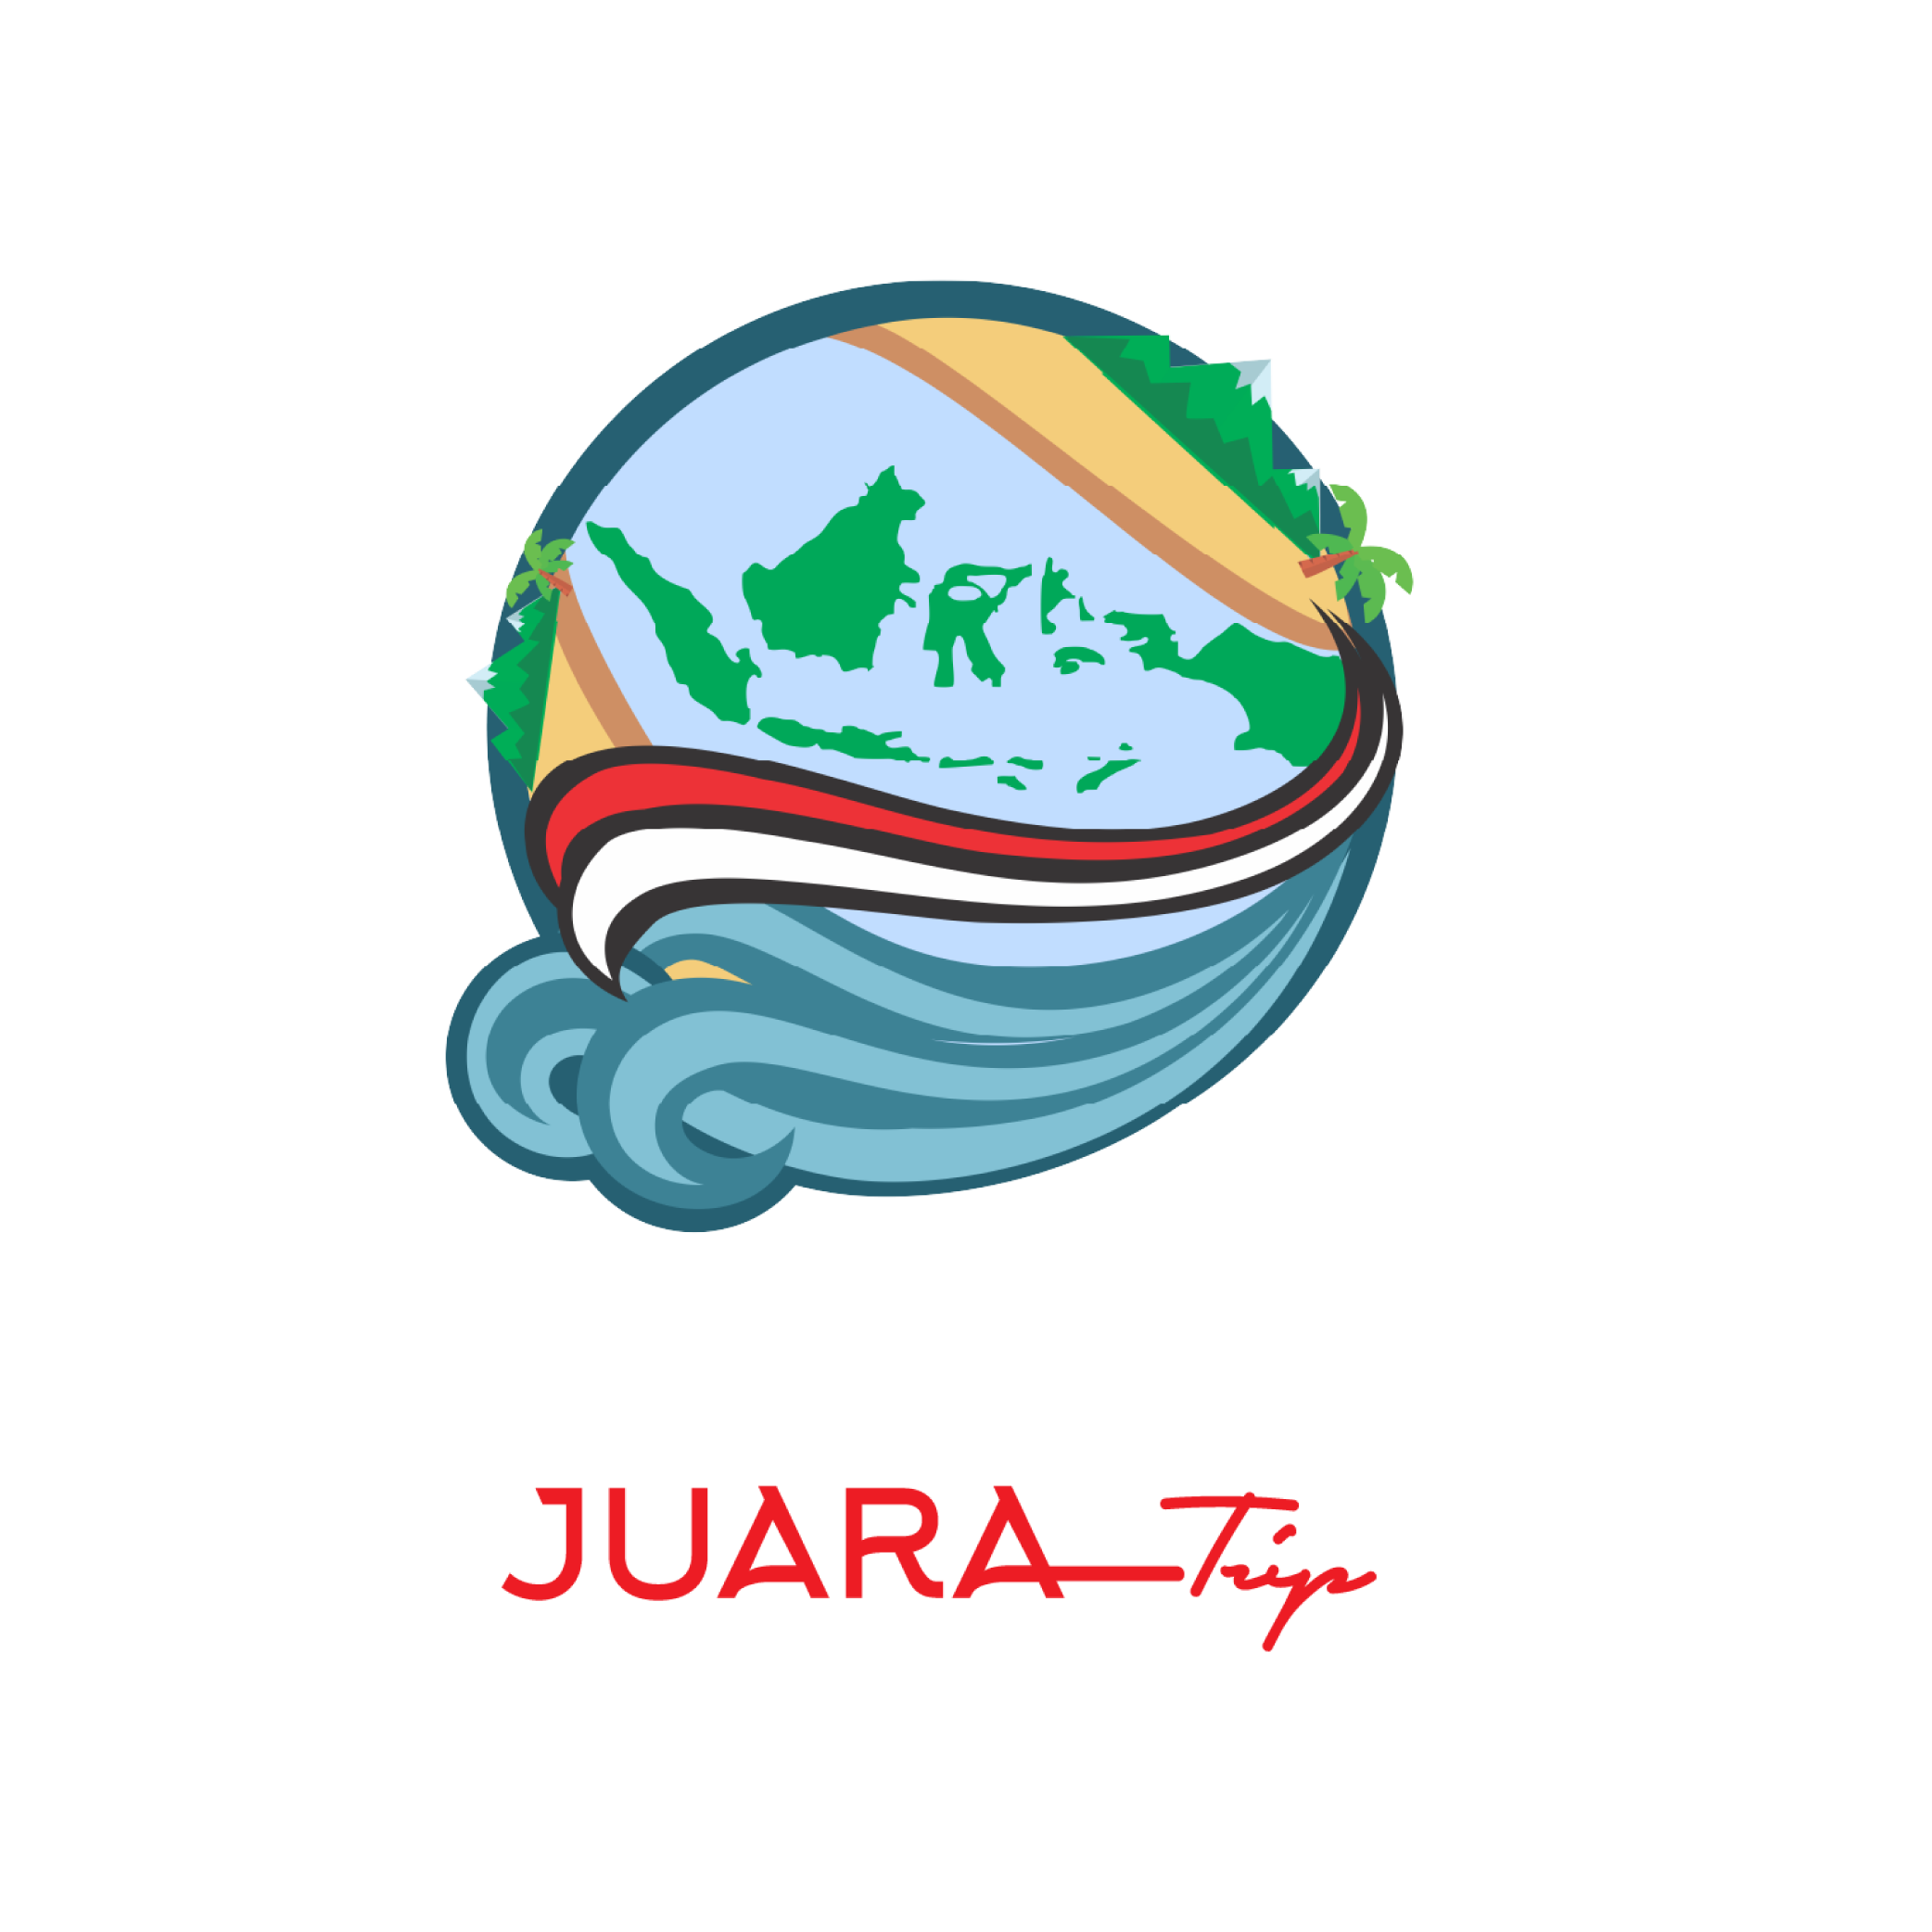 Indonesia Juara Trip